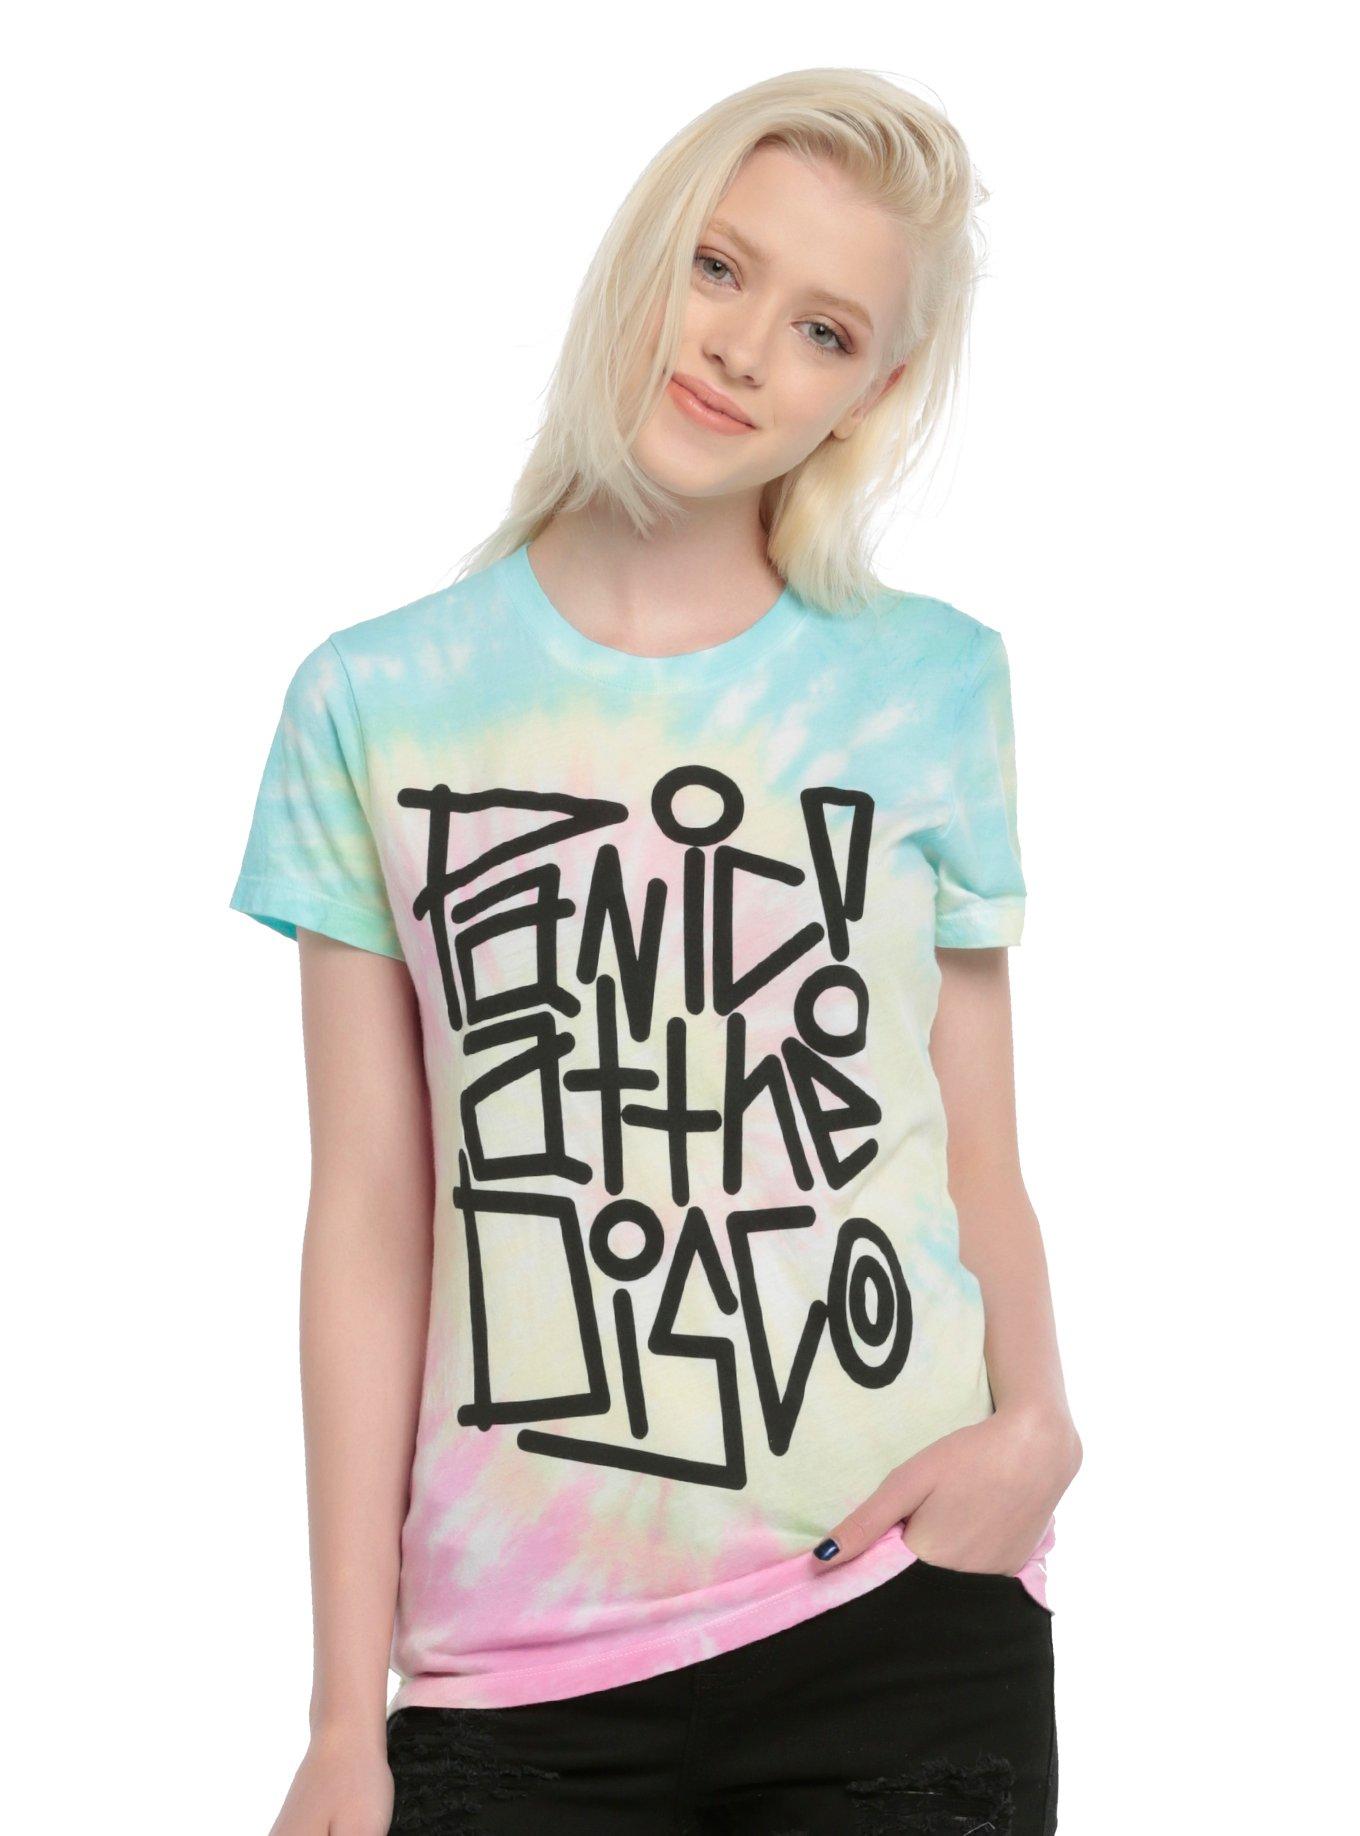 Panic! At The Disco Tie-Dye Girls T-Shirt | Hot Topic